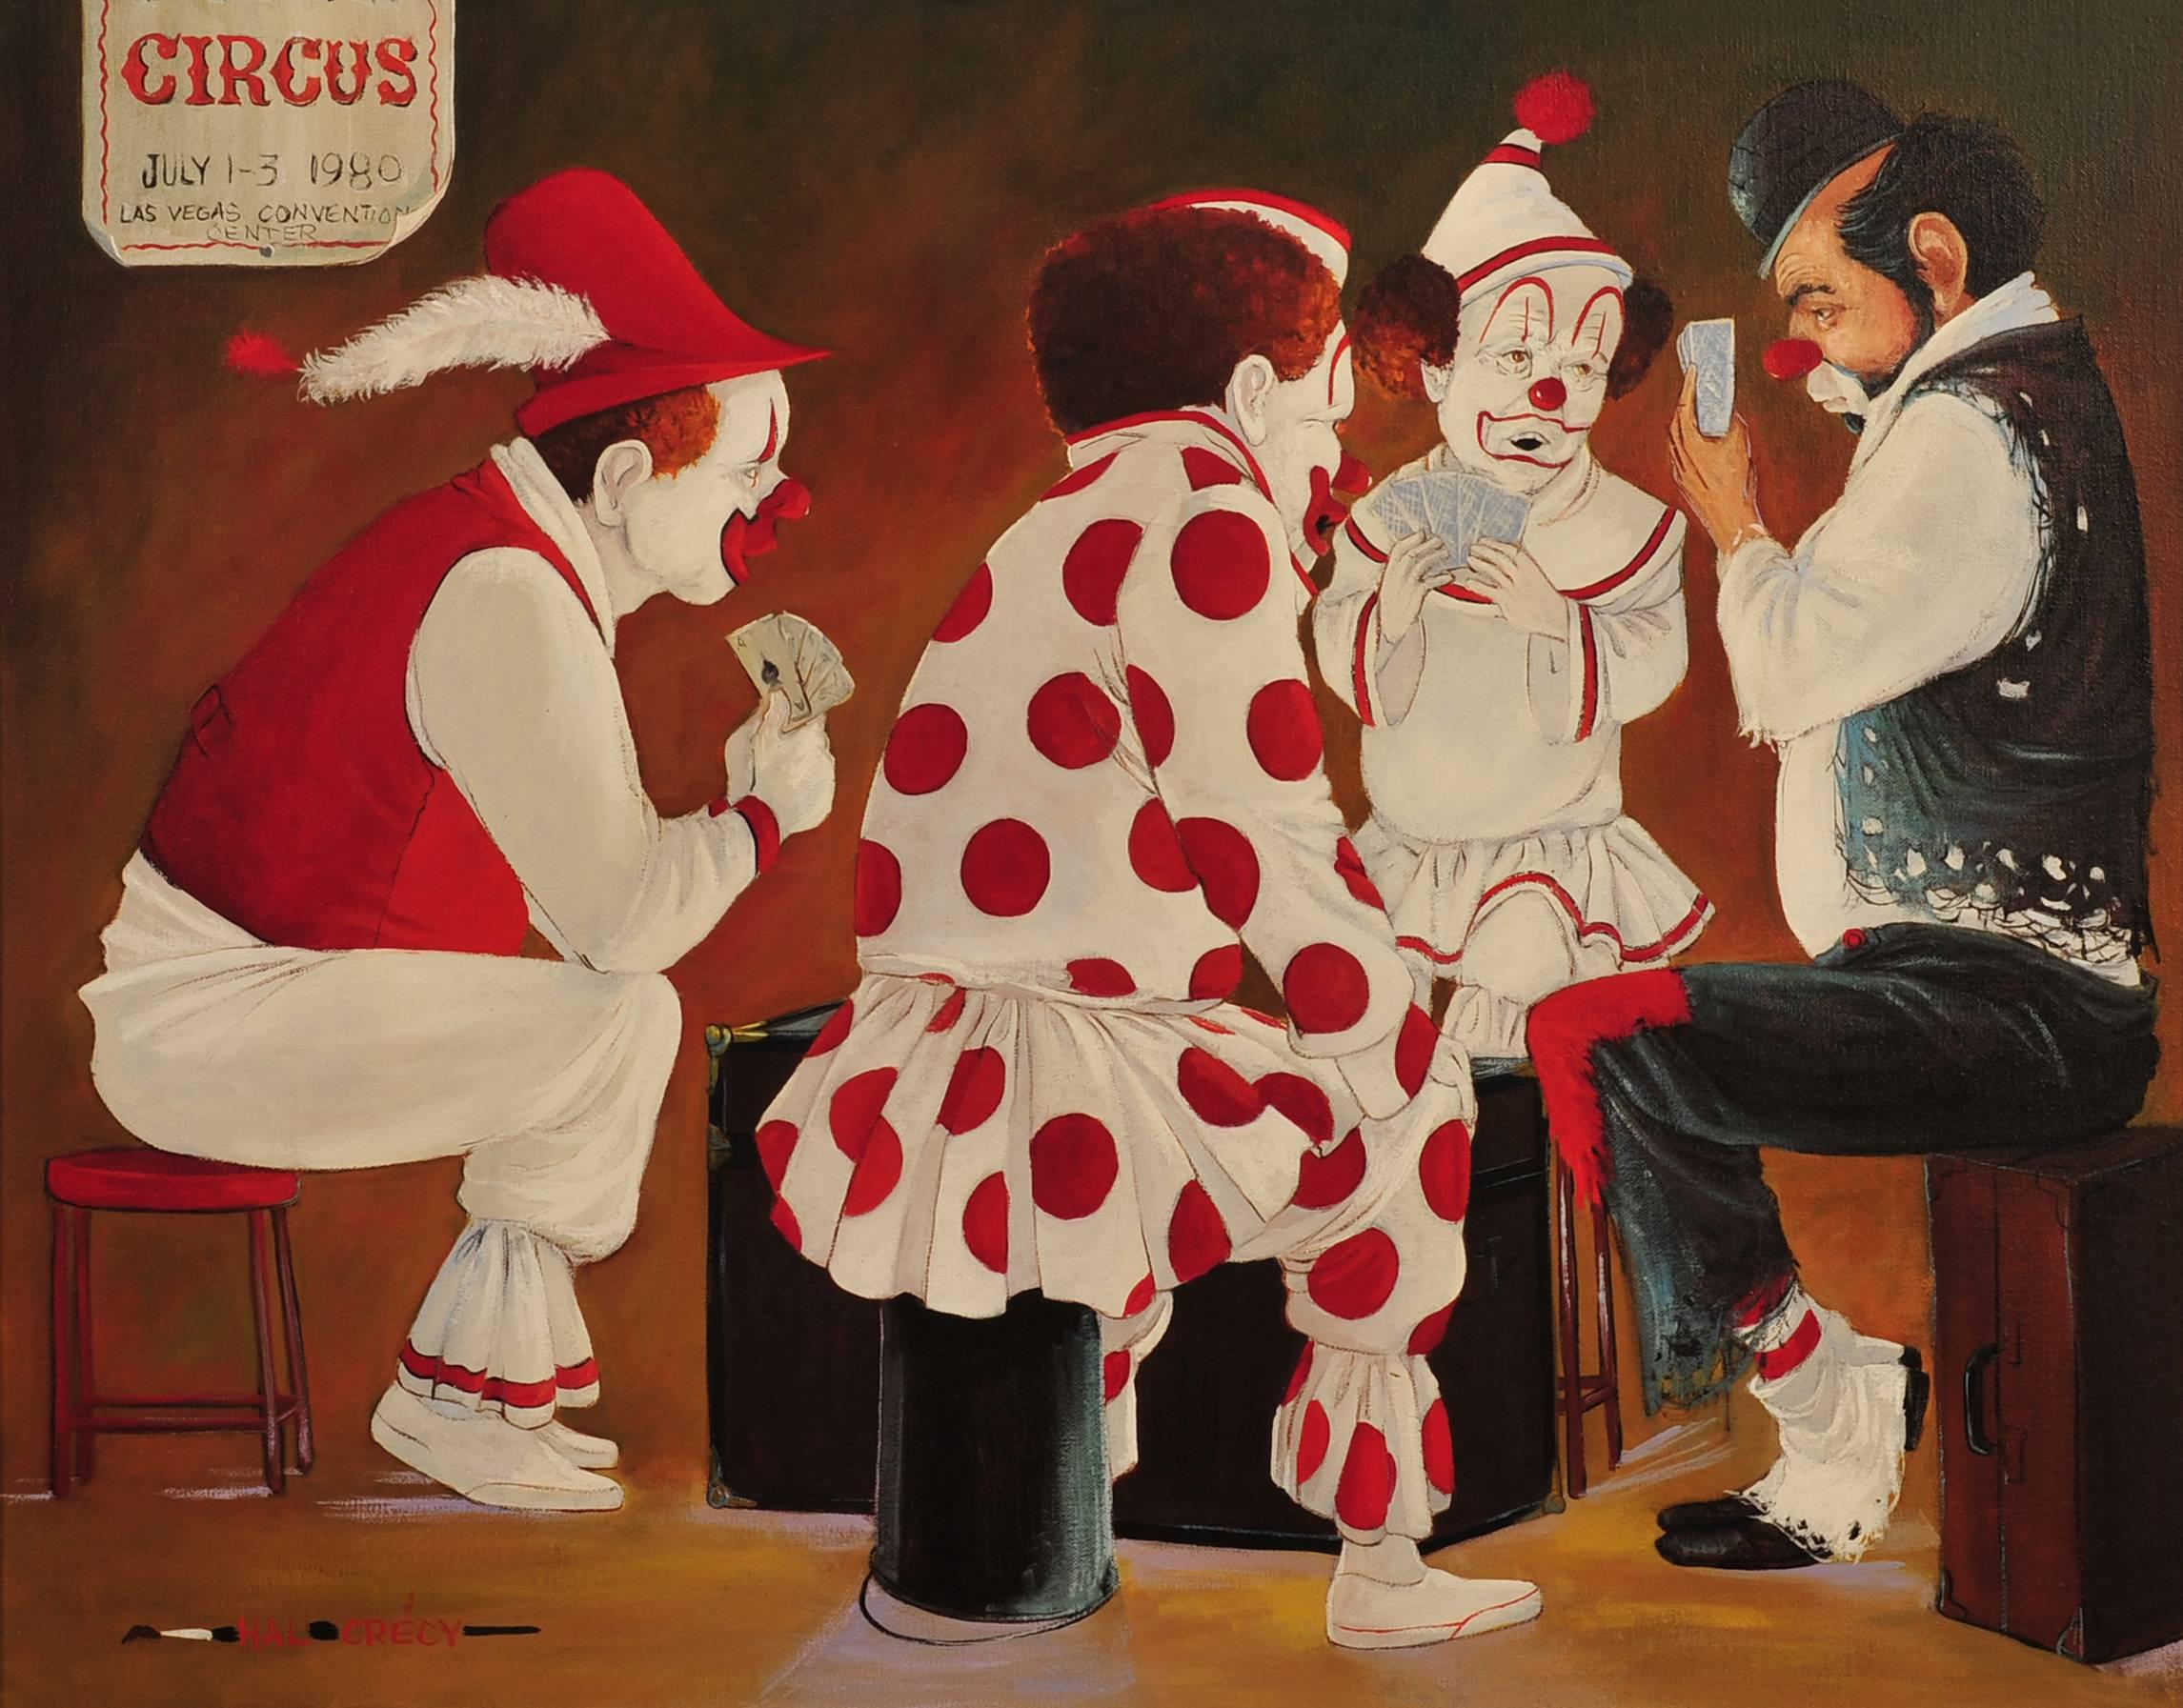 Arthur Saron Sarnoff картины клоуны. Poker Painting обзор блокна. There are three Clowns at the Circus. 3 Clowns looking at each other. There three clowns at the